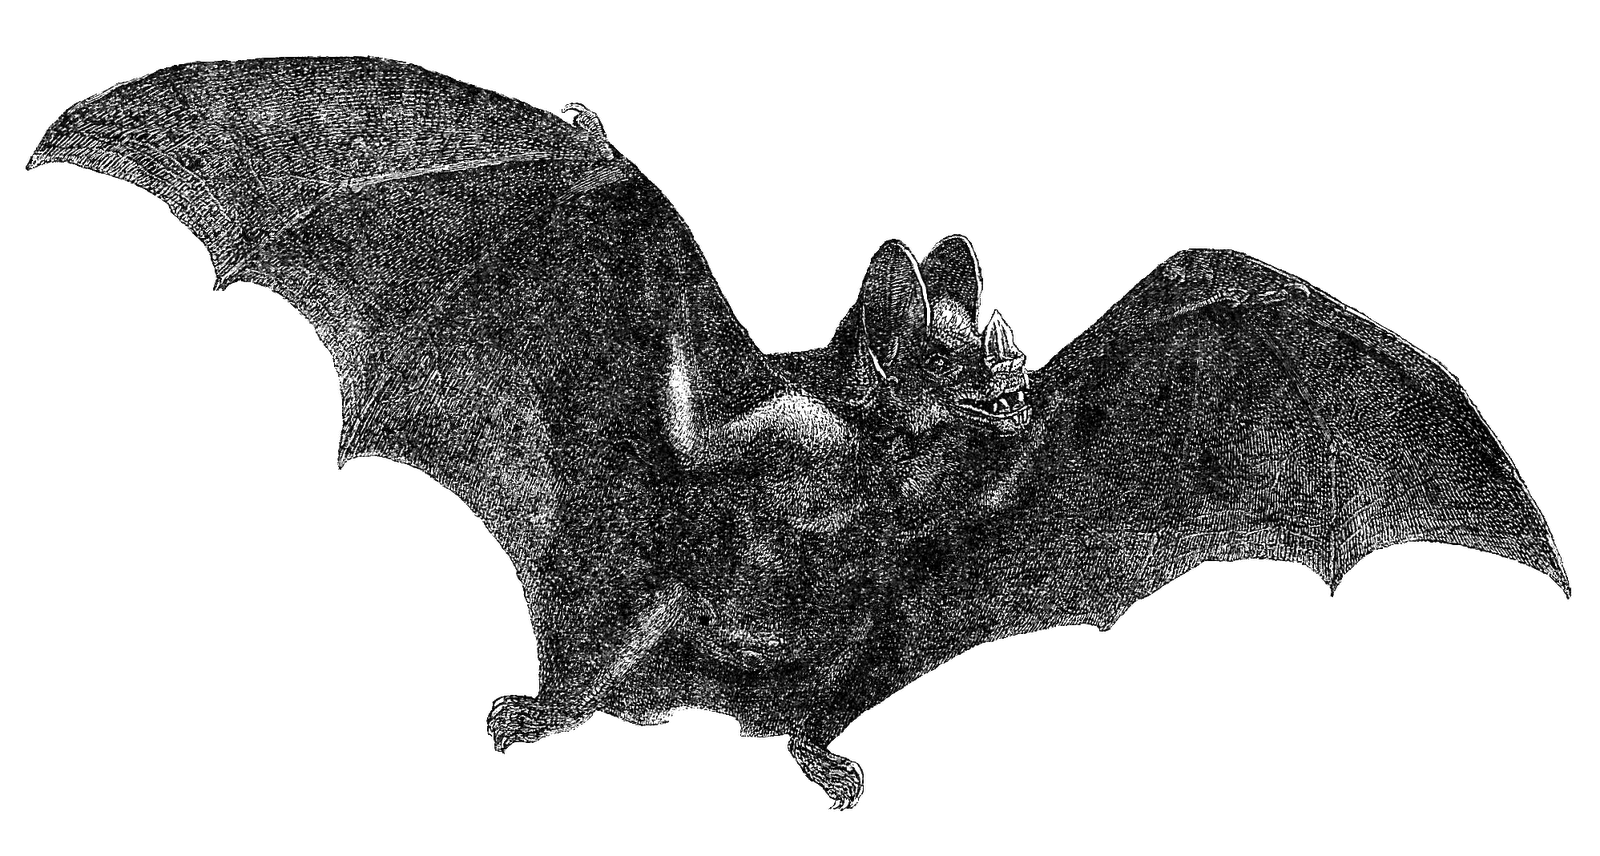 clipart bat vampire bat